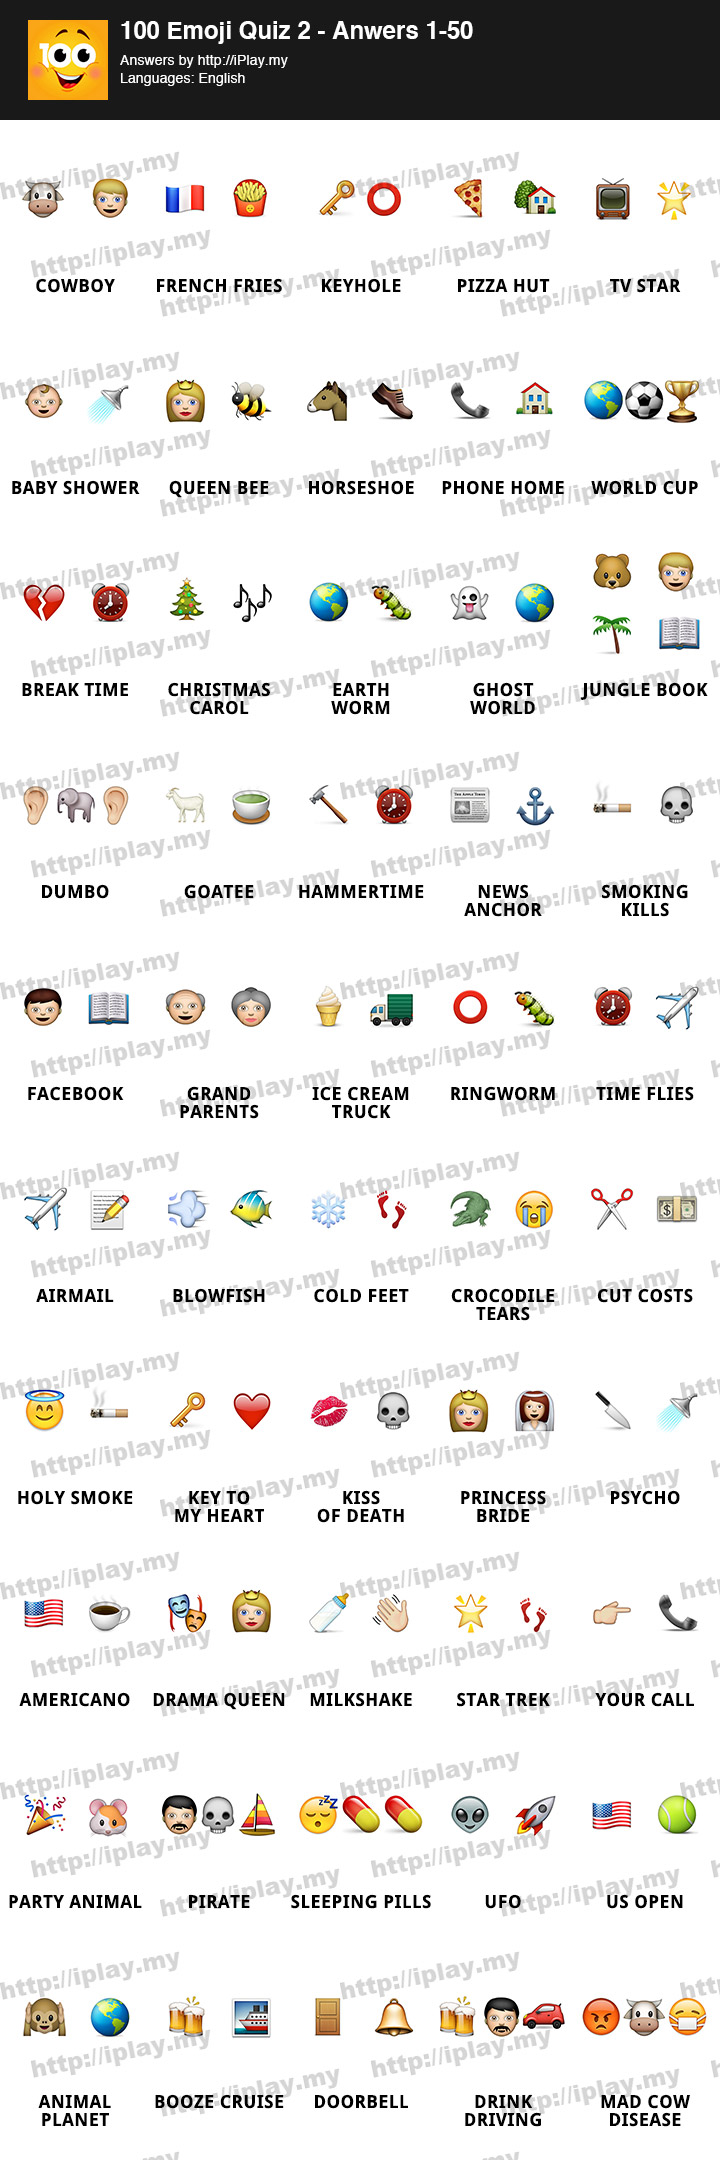 100 Emoji Quiz 2 Answers iPlay.my